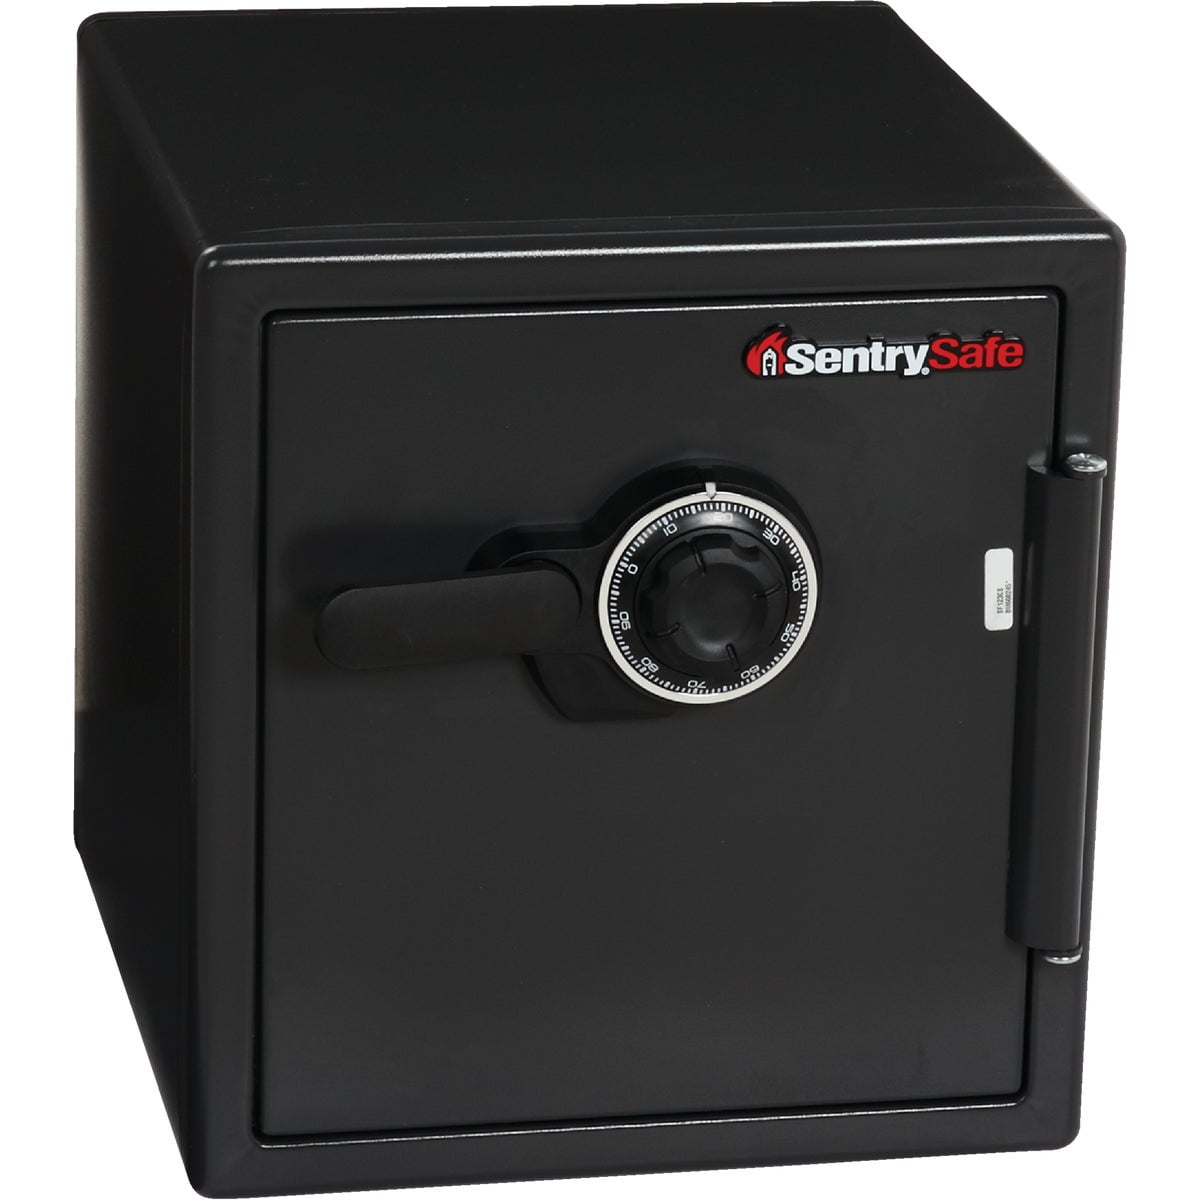 Sentry Safe 1.23 Cu. Ft. Capacity Combination Fire-Safe Floor Safe 